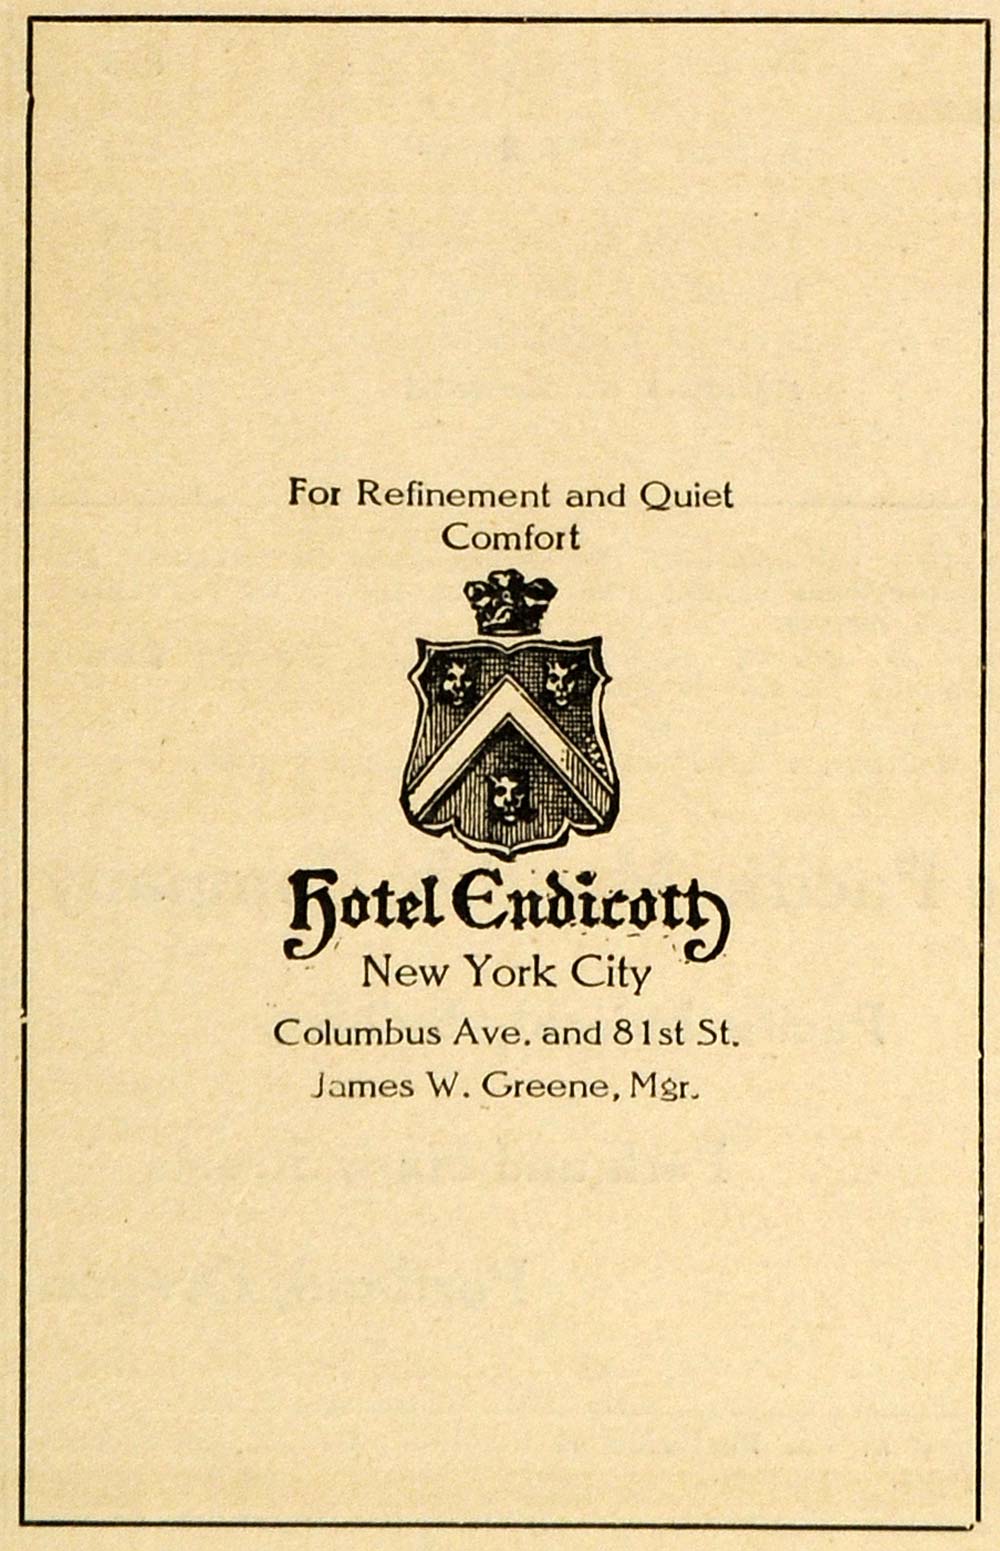 1910 Ad Hotel Endicott Travel New York Edward Angell - ORIGINAL ADVERTISING PM2